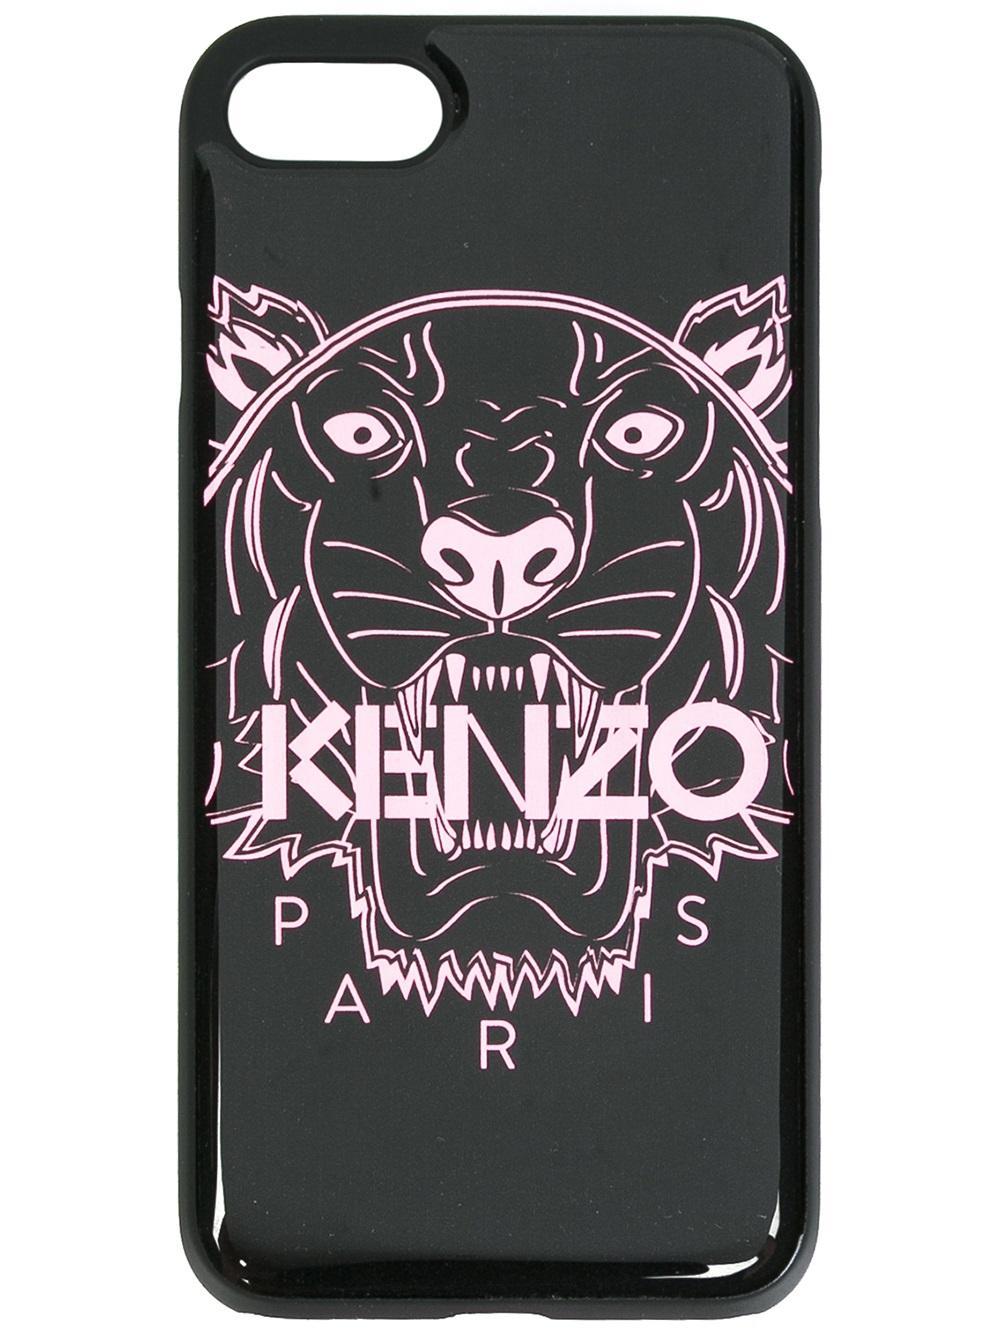 iphone 7 case kenzo off 55% - www 